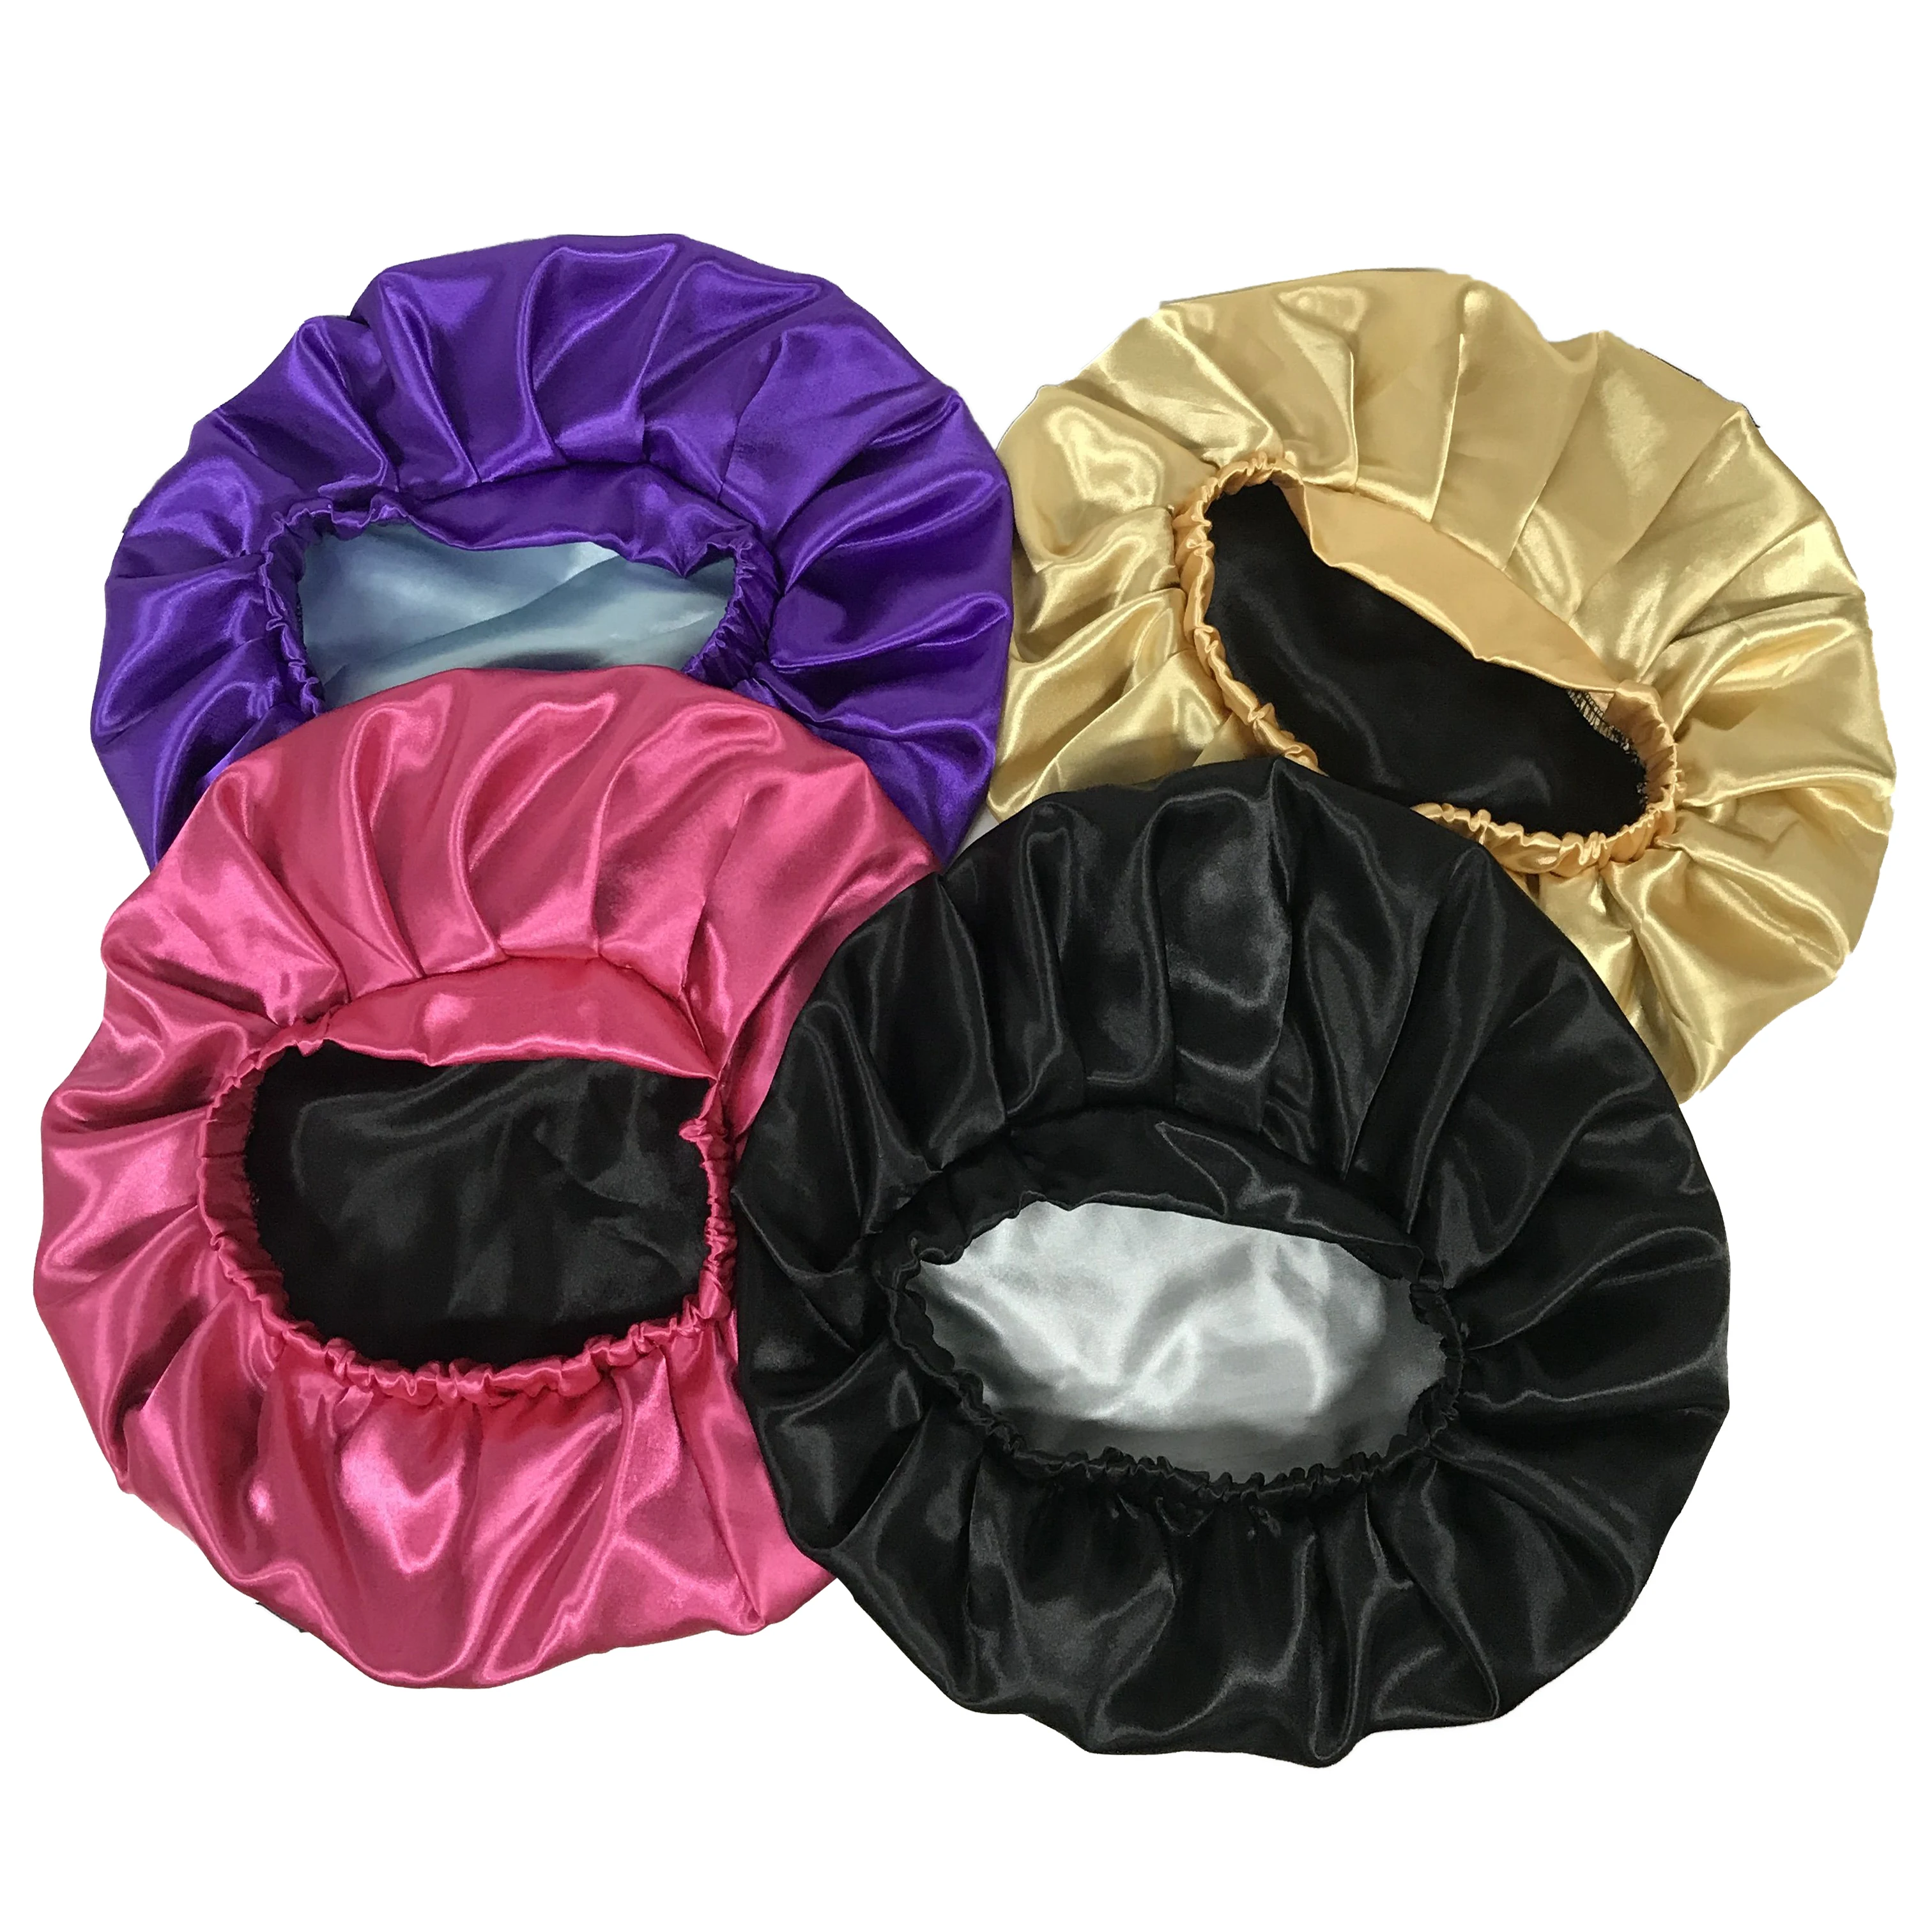 Buy Wholesale China Bonnet,custom Designer Bonnets Elastic Wide Band Satin  Bonnet Sleeping Hats & Bonnet at USD 1.5